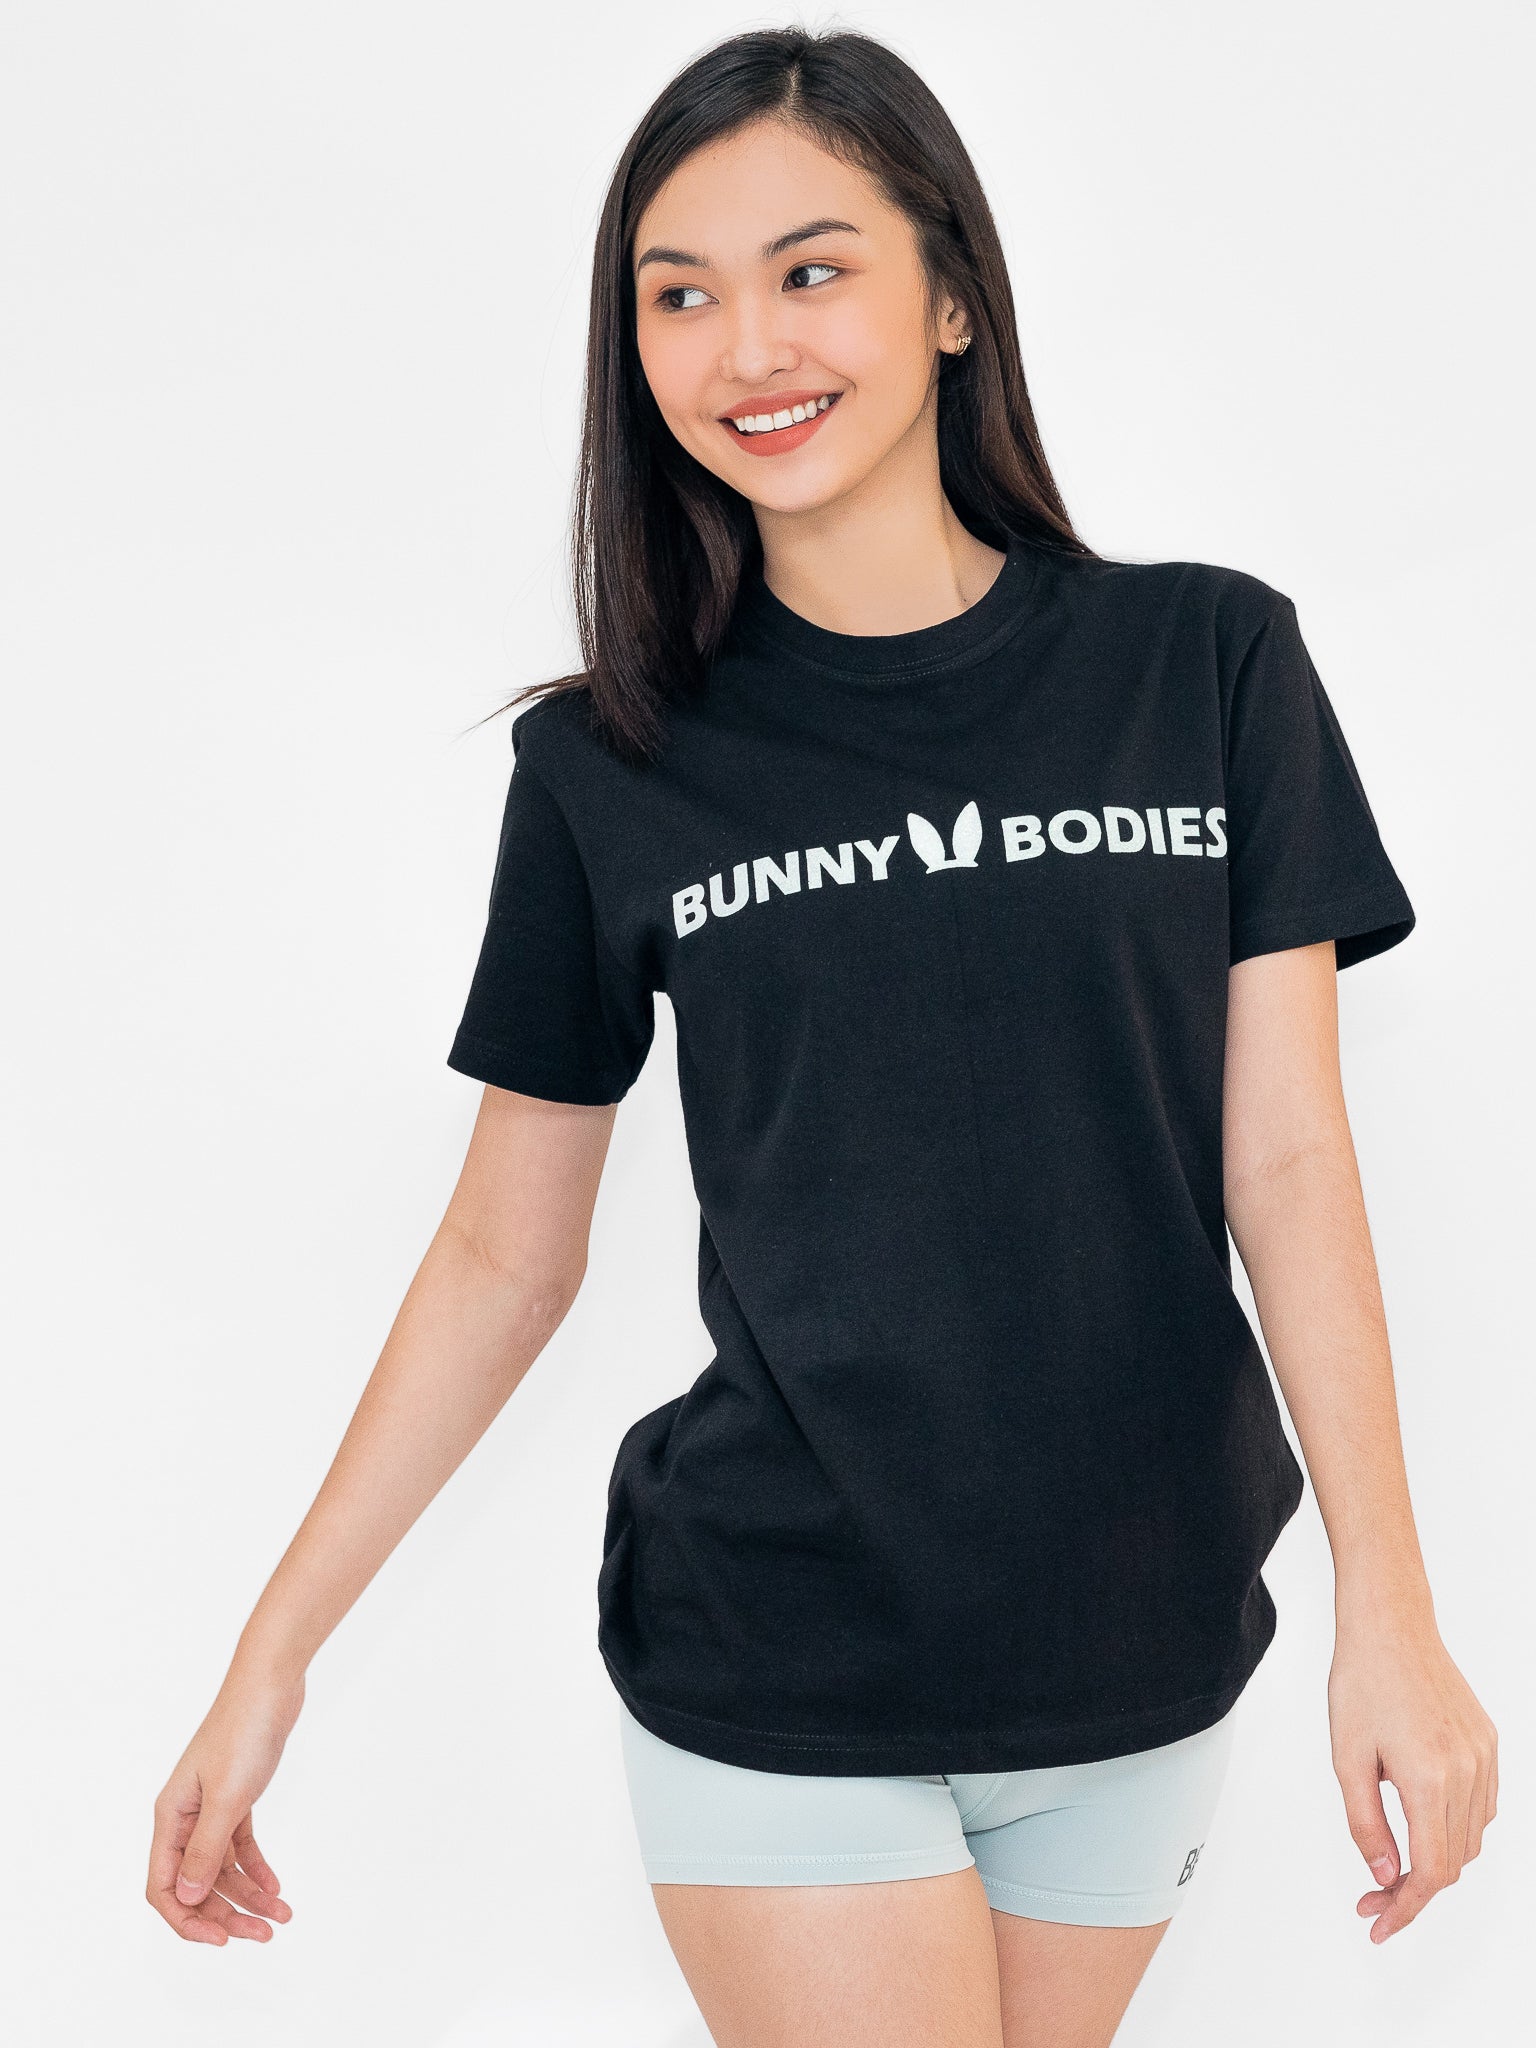 Bunny Bodies Sparkle Shirt